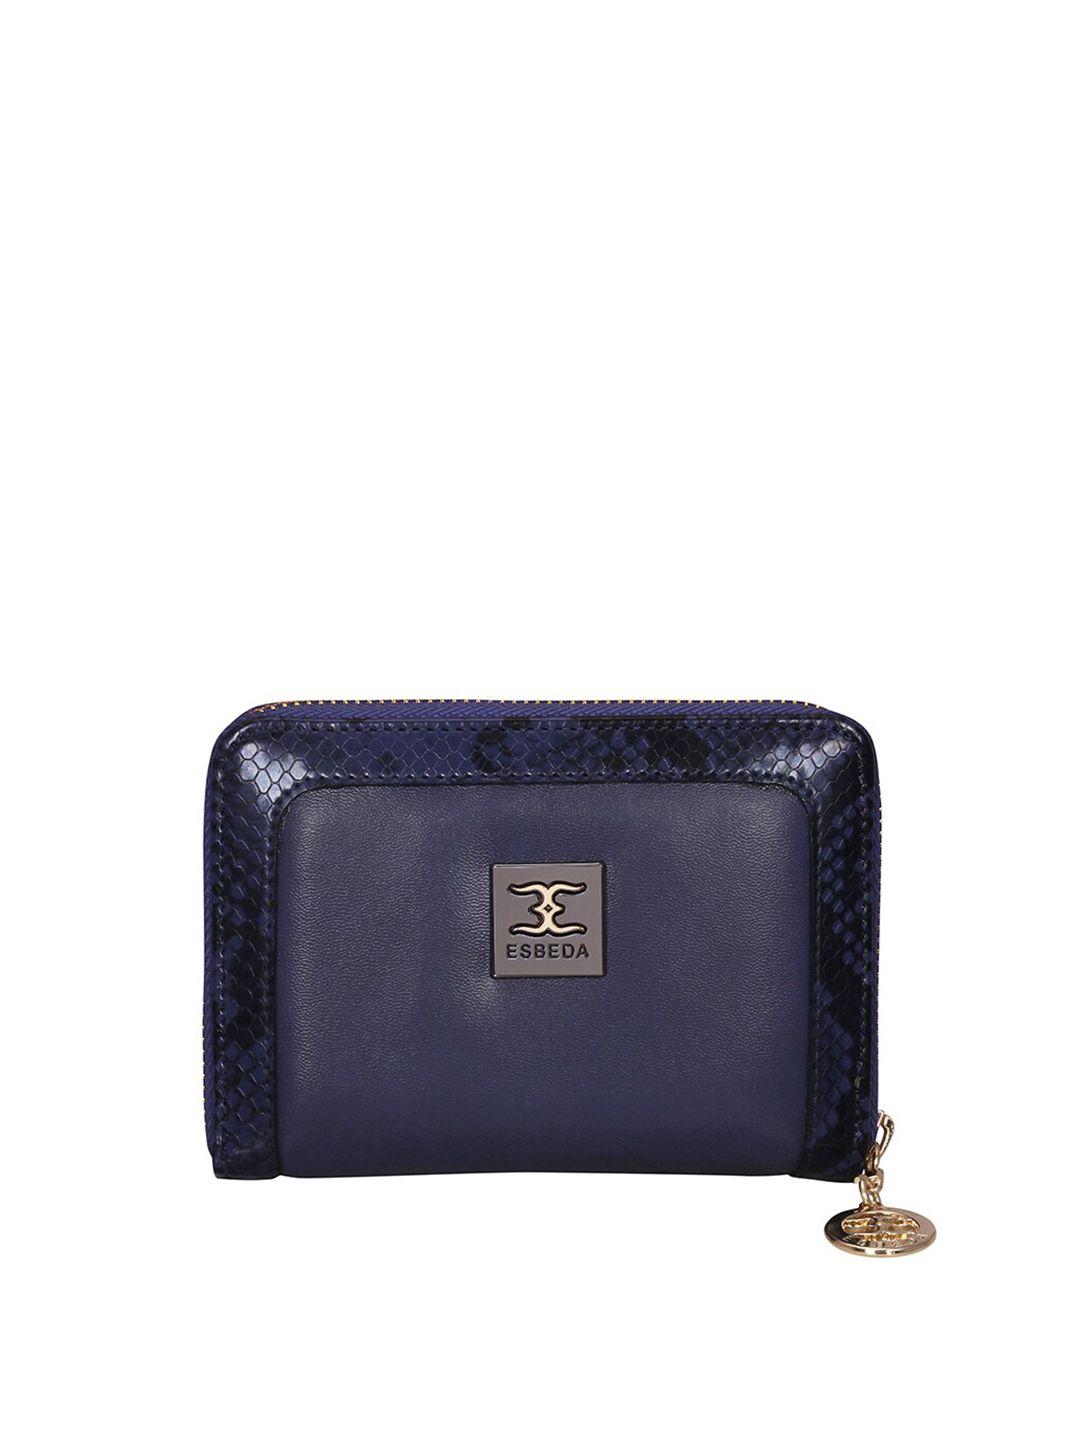 esbeda women navy blue & black printed zip around wallet